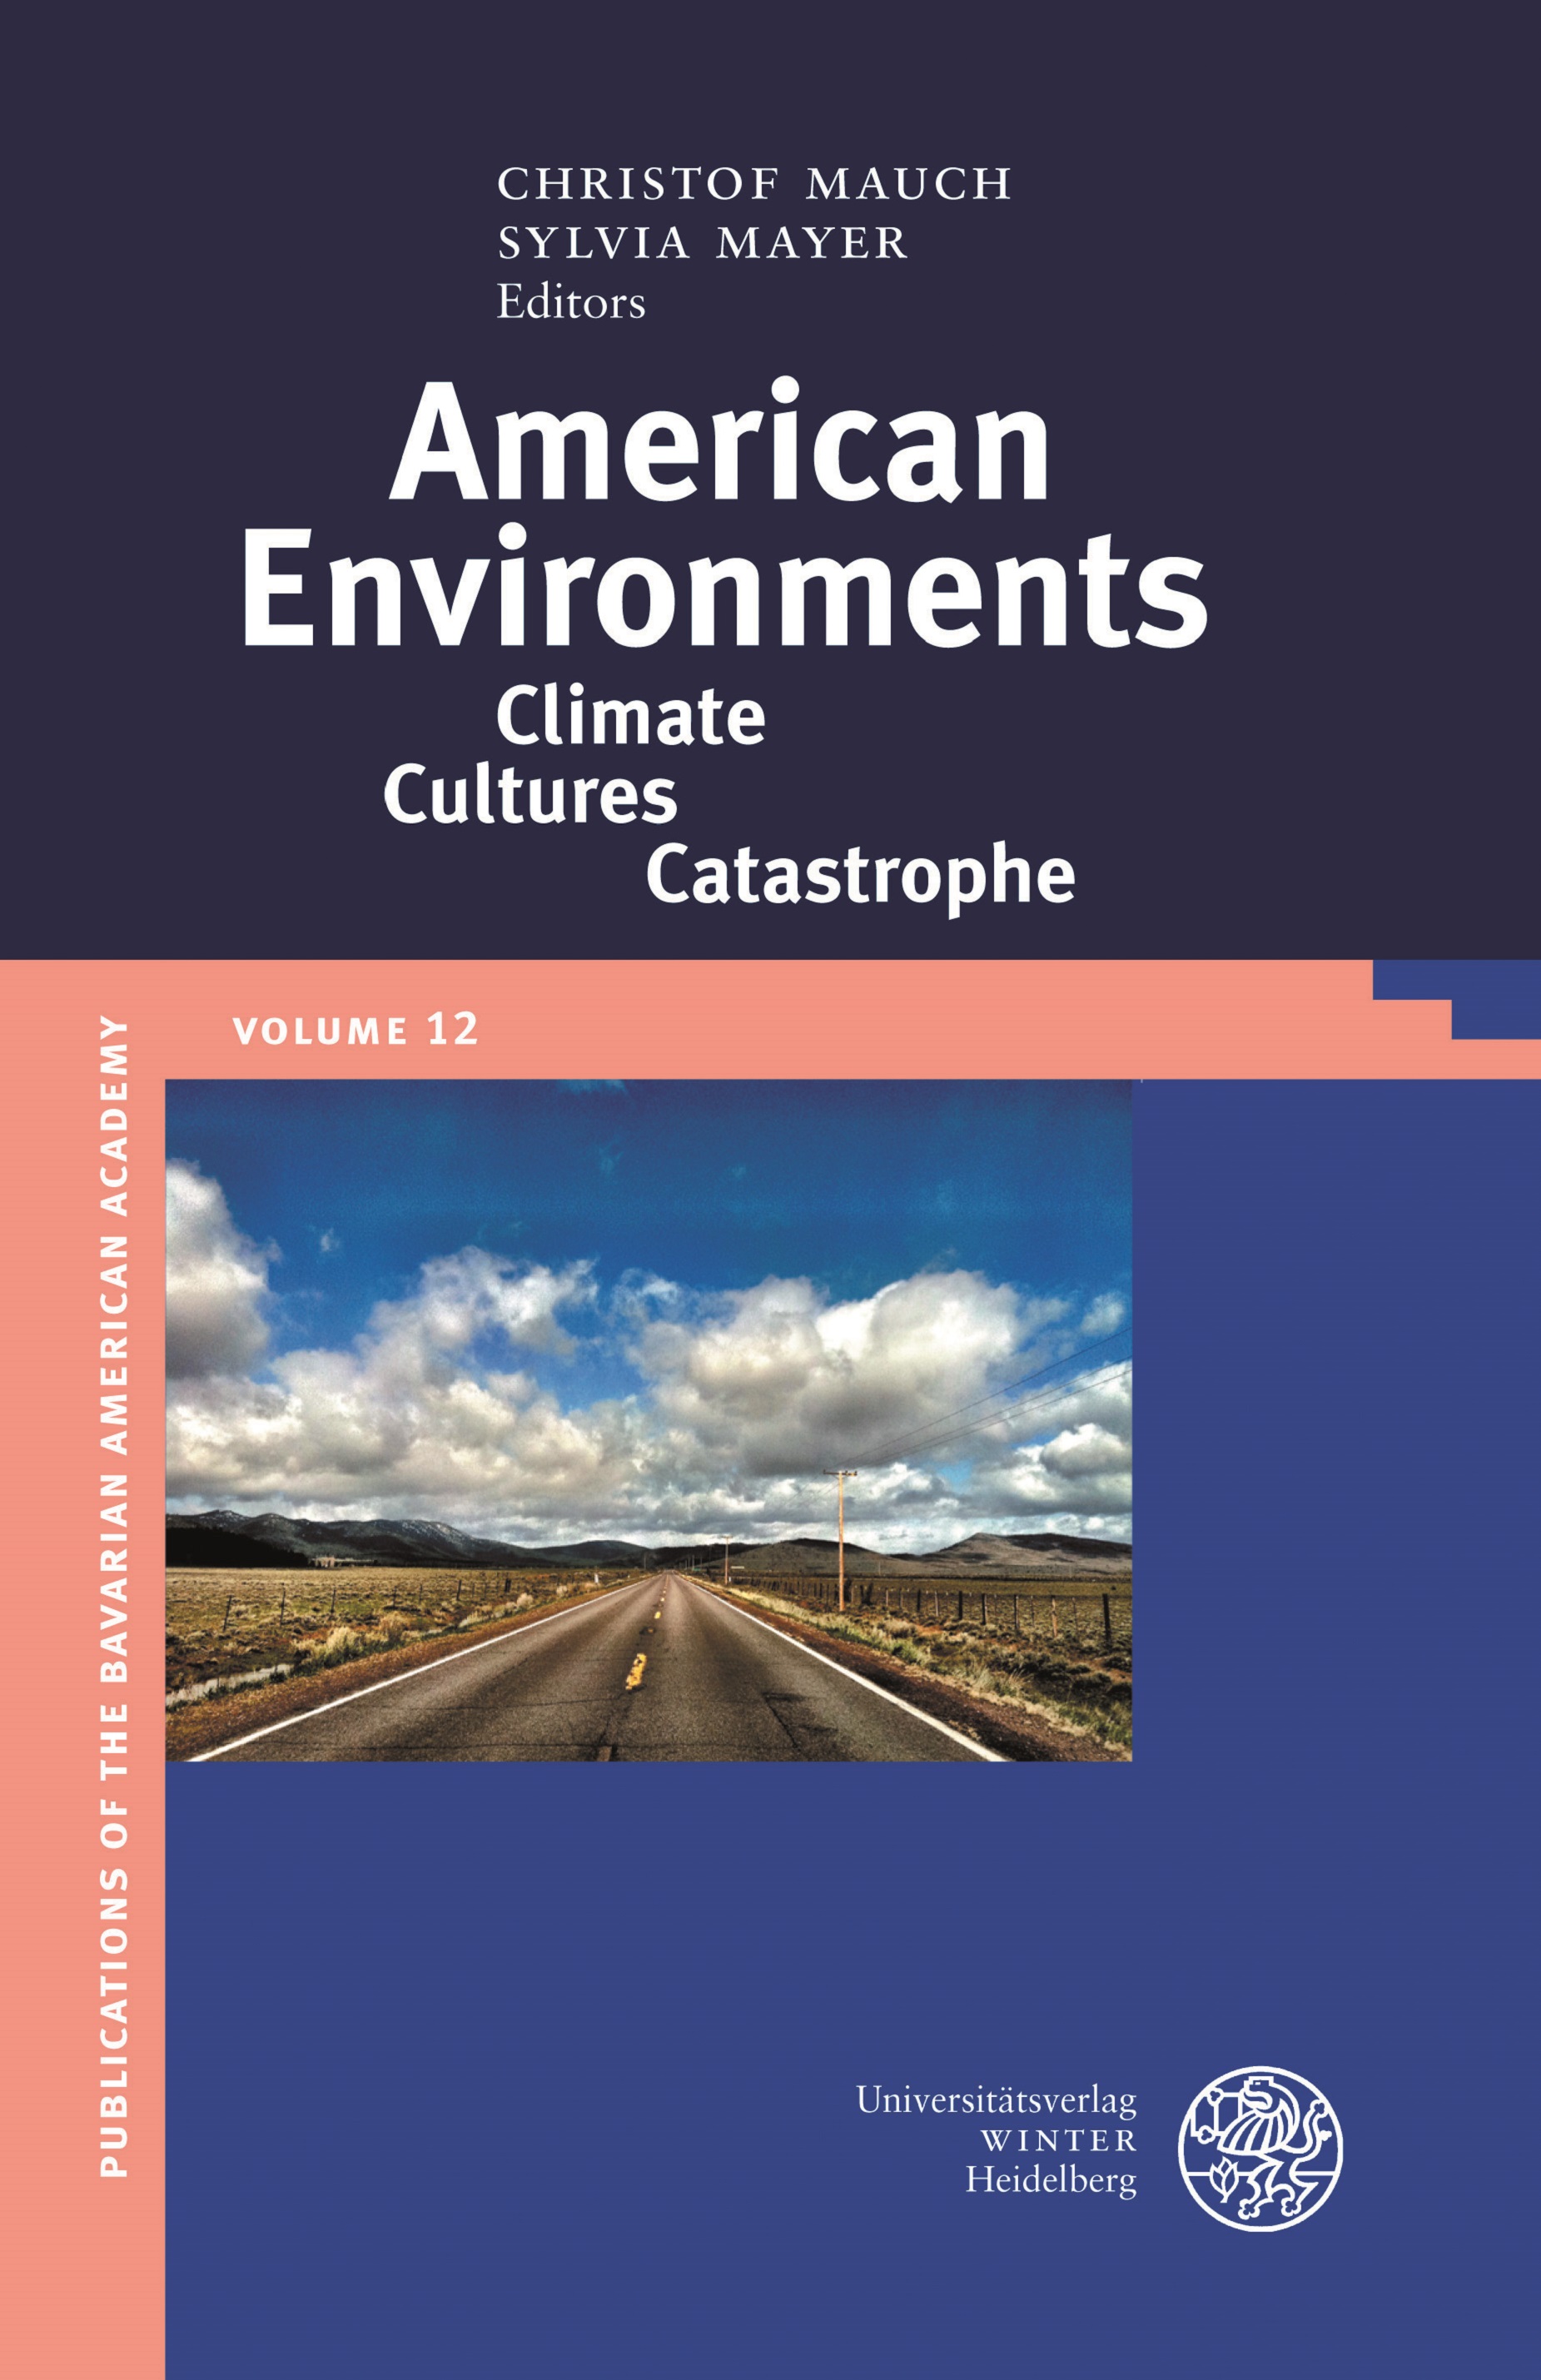 BAA publication Vol. 12 American Environments: Climate, Cultures, Catastrophe